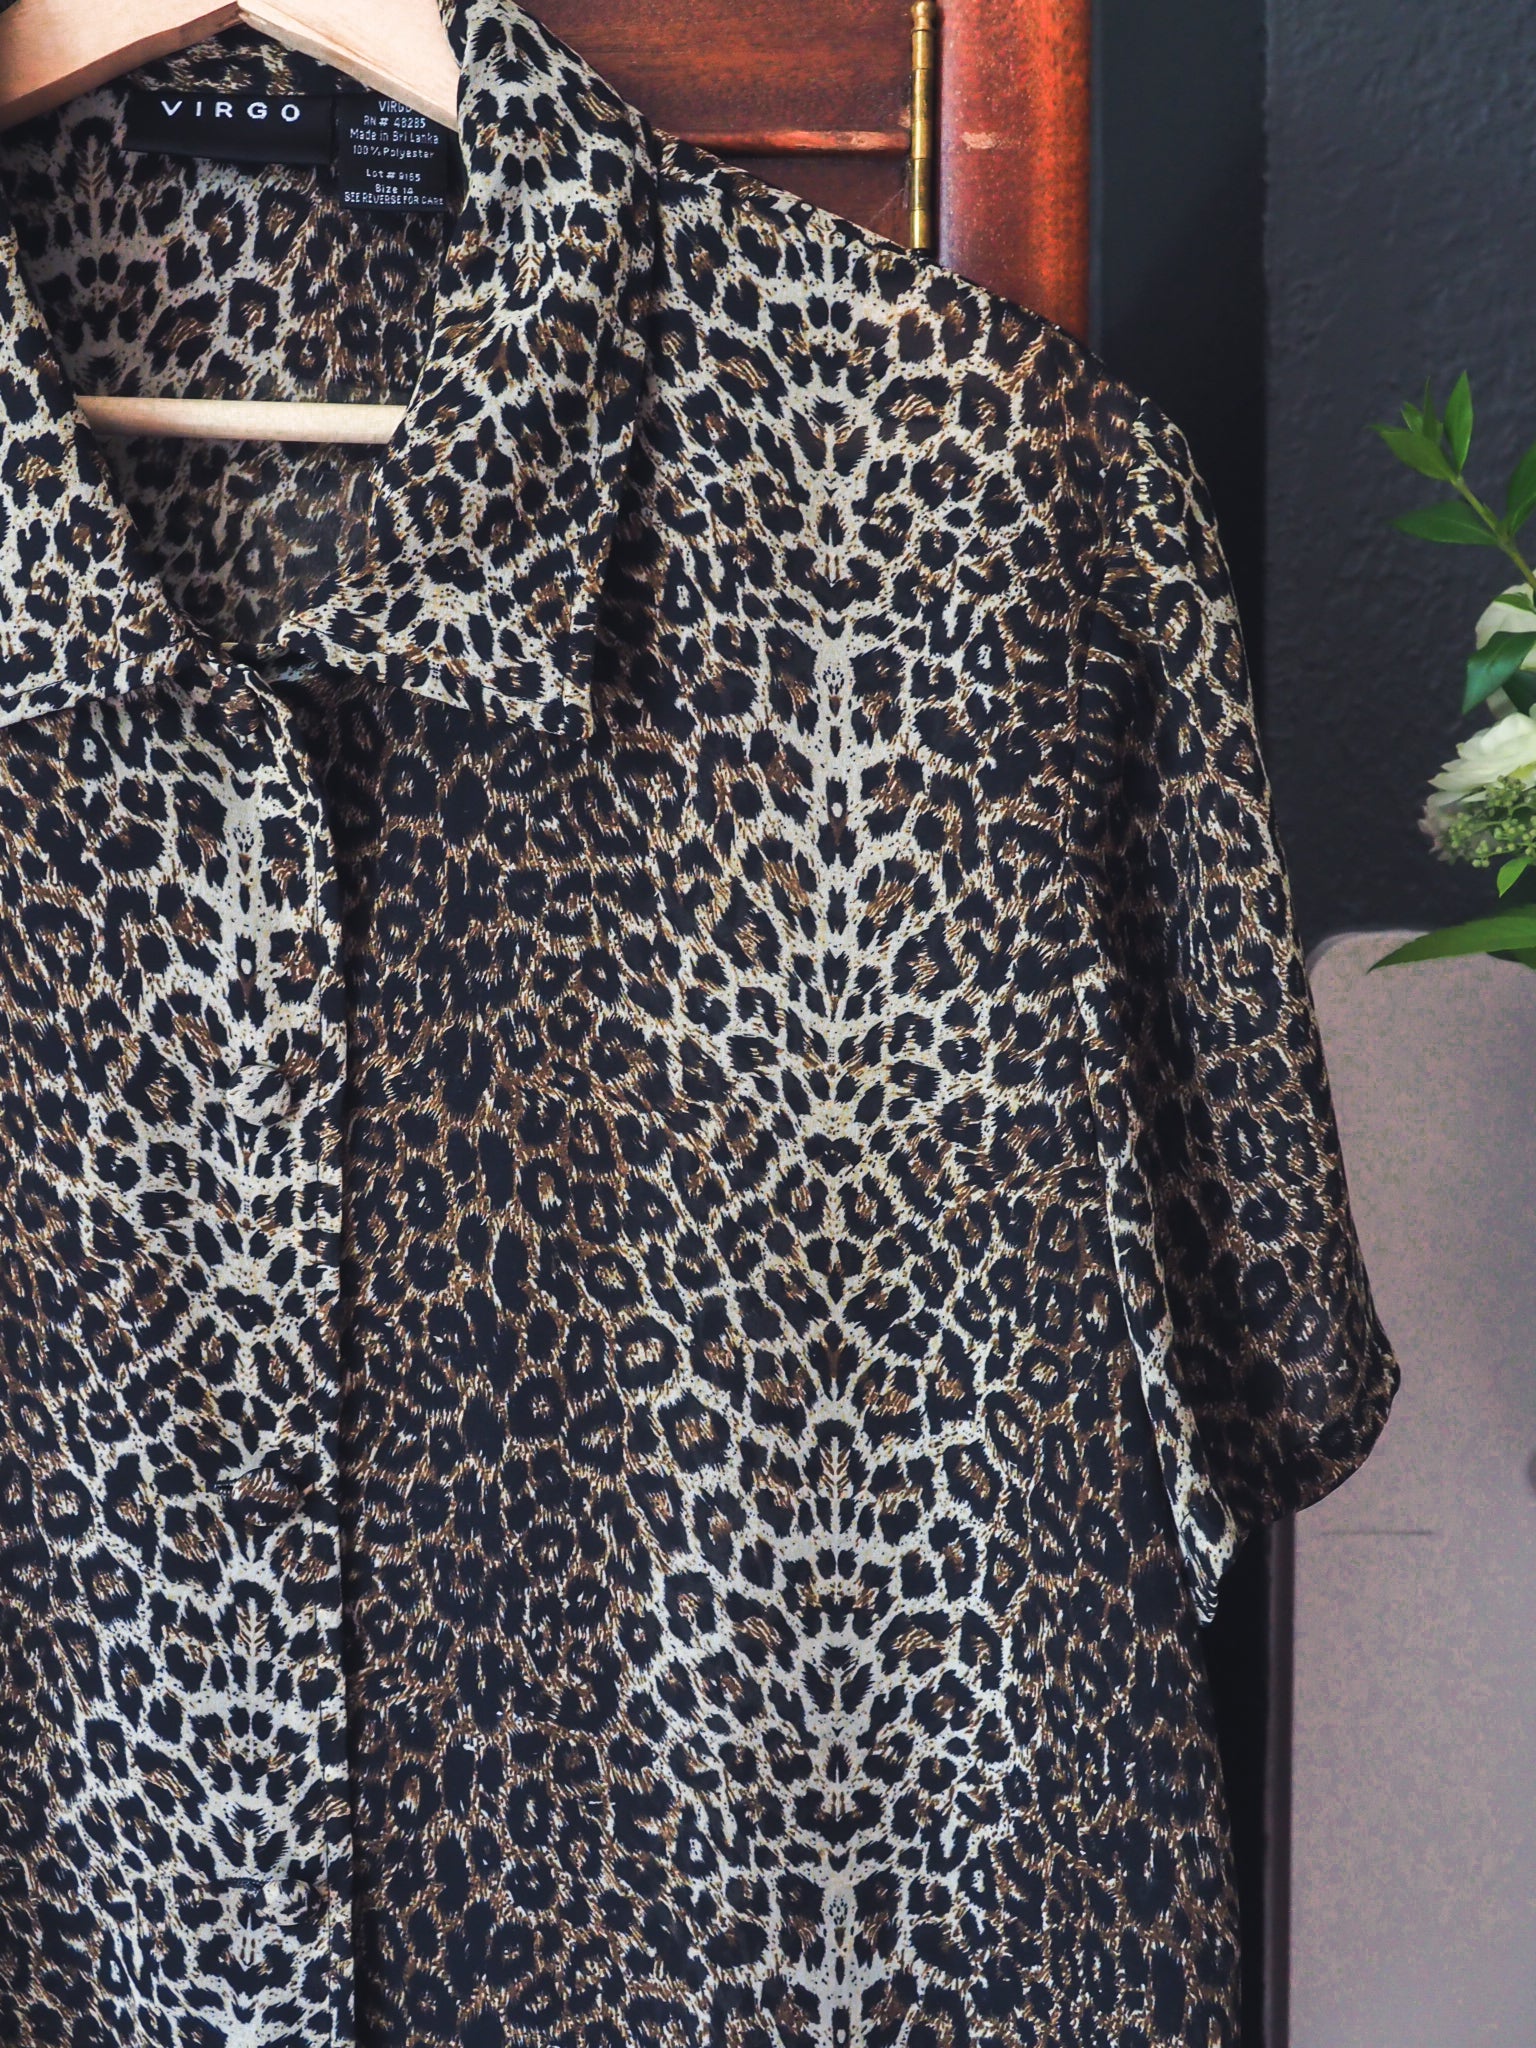 Vintage Leopard Print Short-Sleeve Blouse